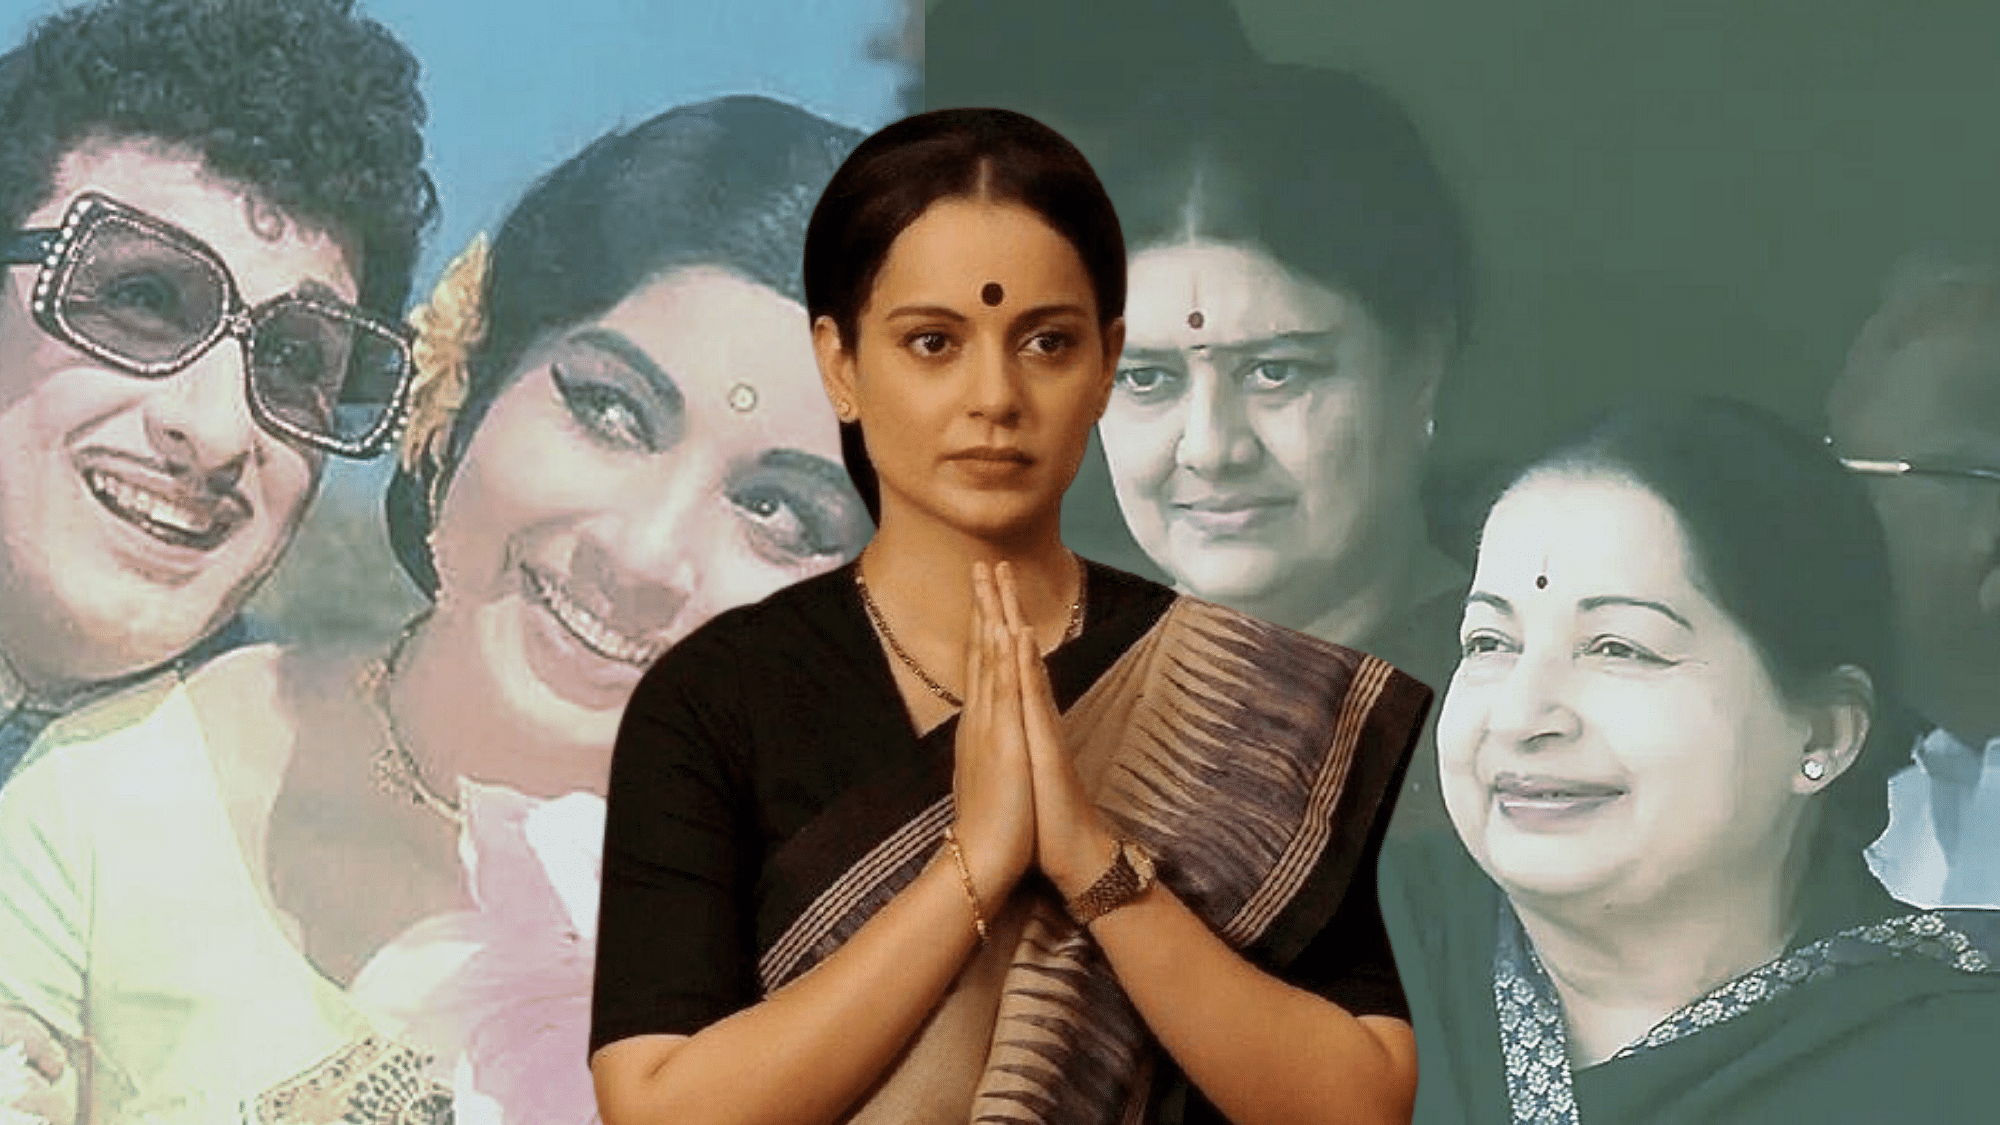 <div class="paragraphs"><p>Kangana Ranaut's <em>Thalaivii</em> fails Jayalalithaa and the portrayal of her life as an actor and politician.</p></div>